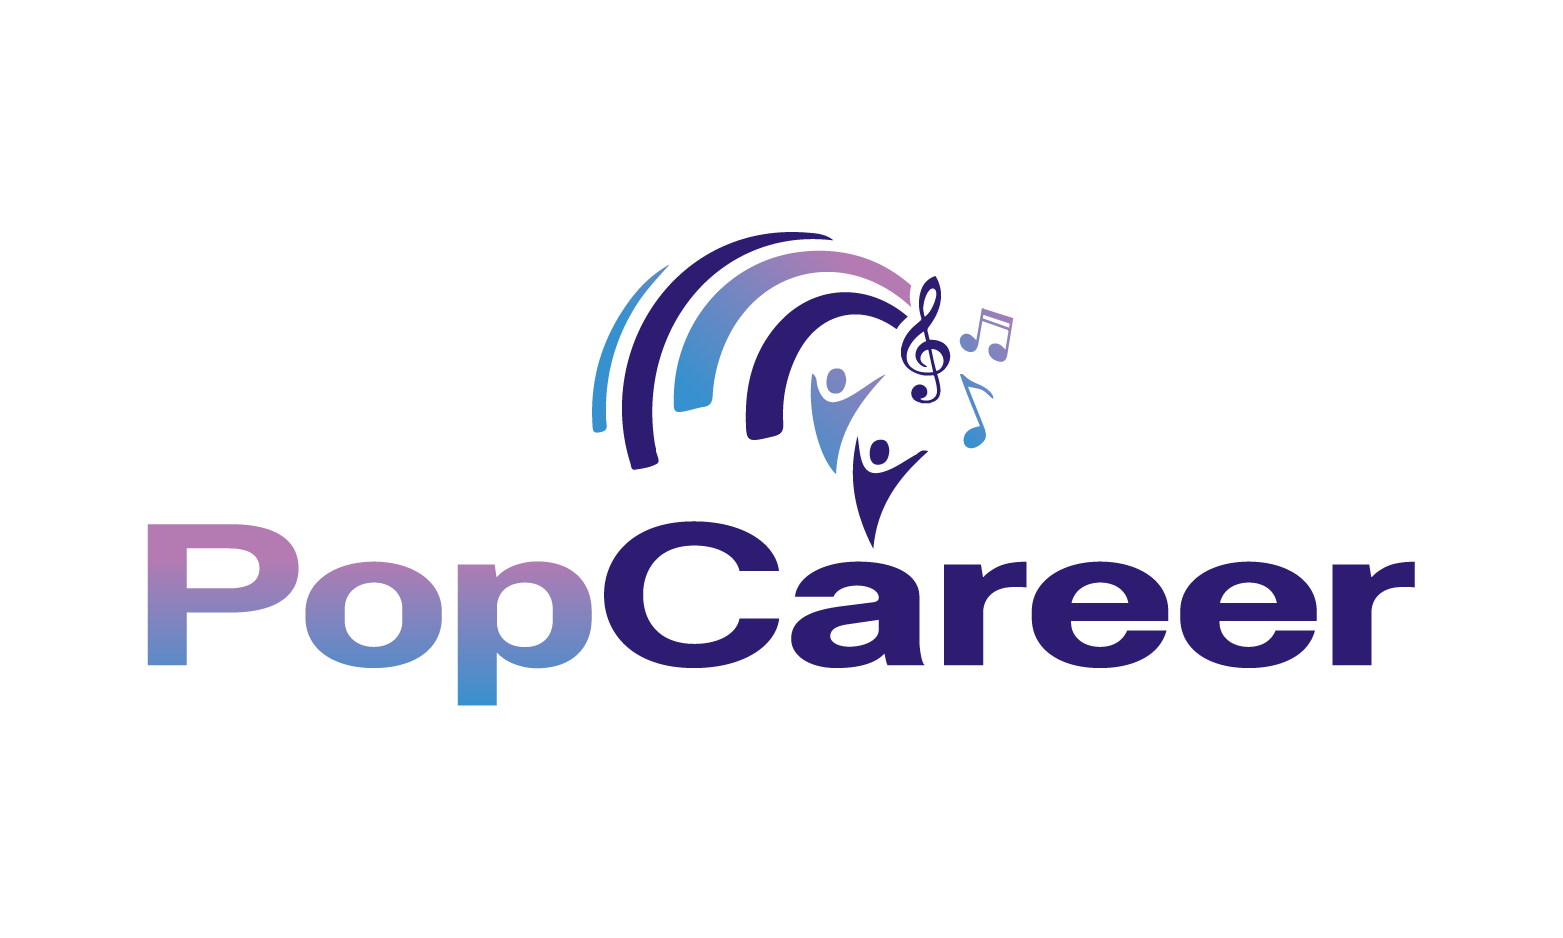 PopCareer.com - Creative brandable domain for sale